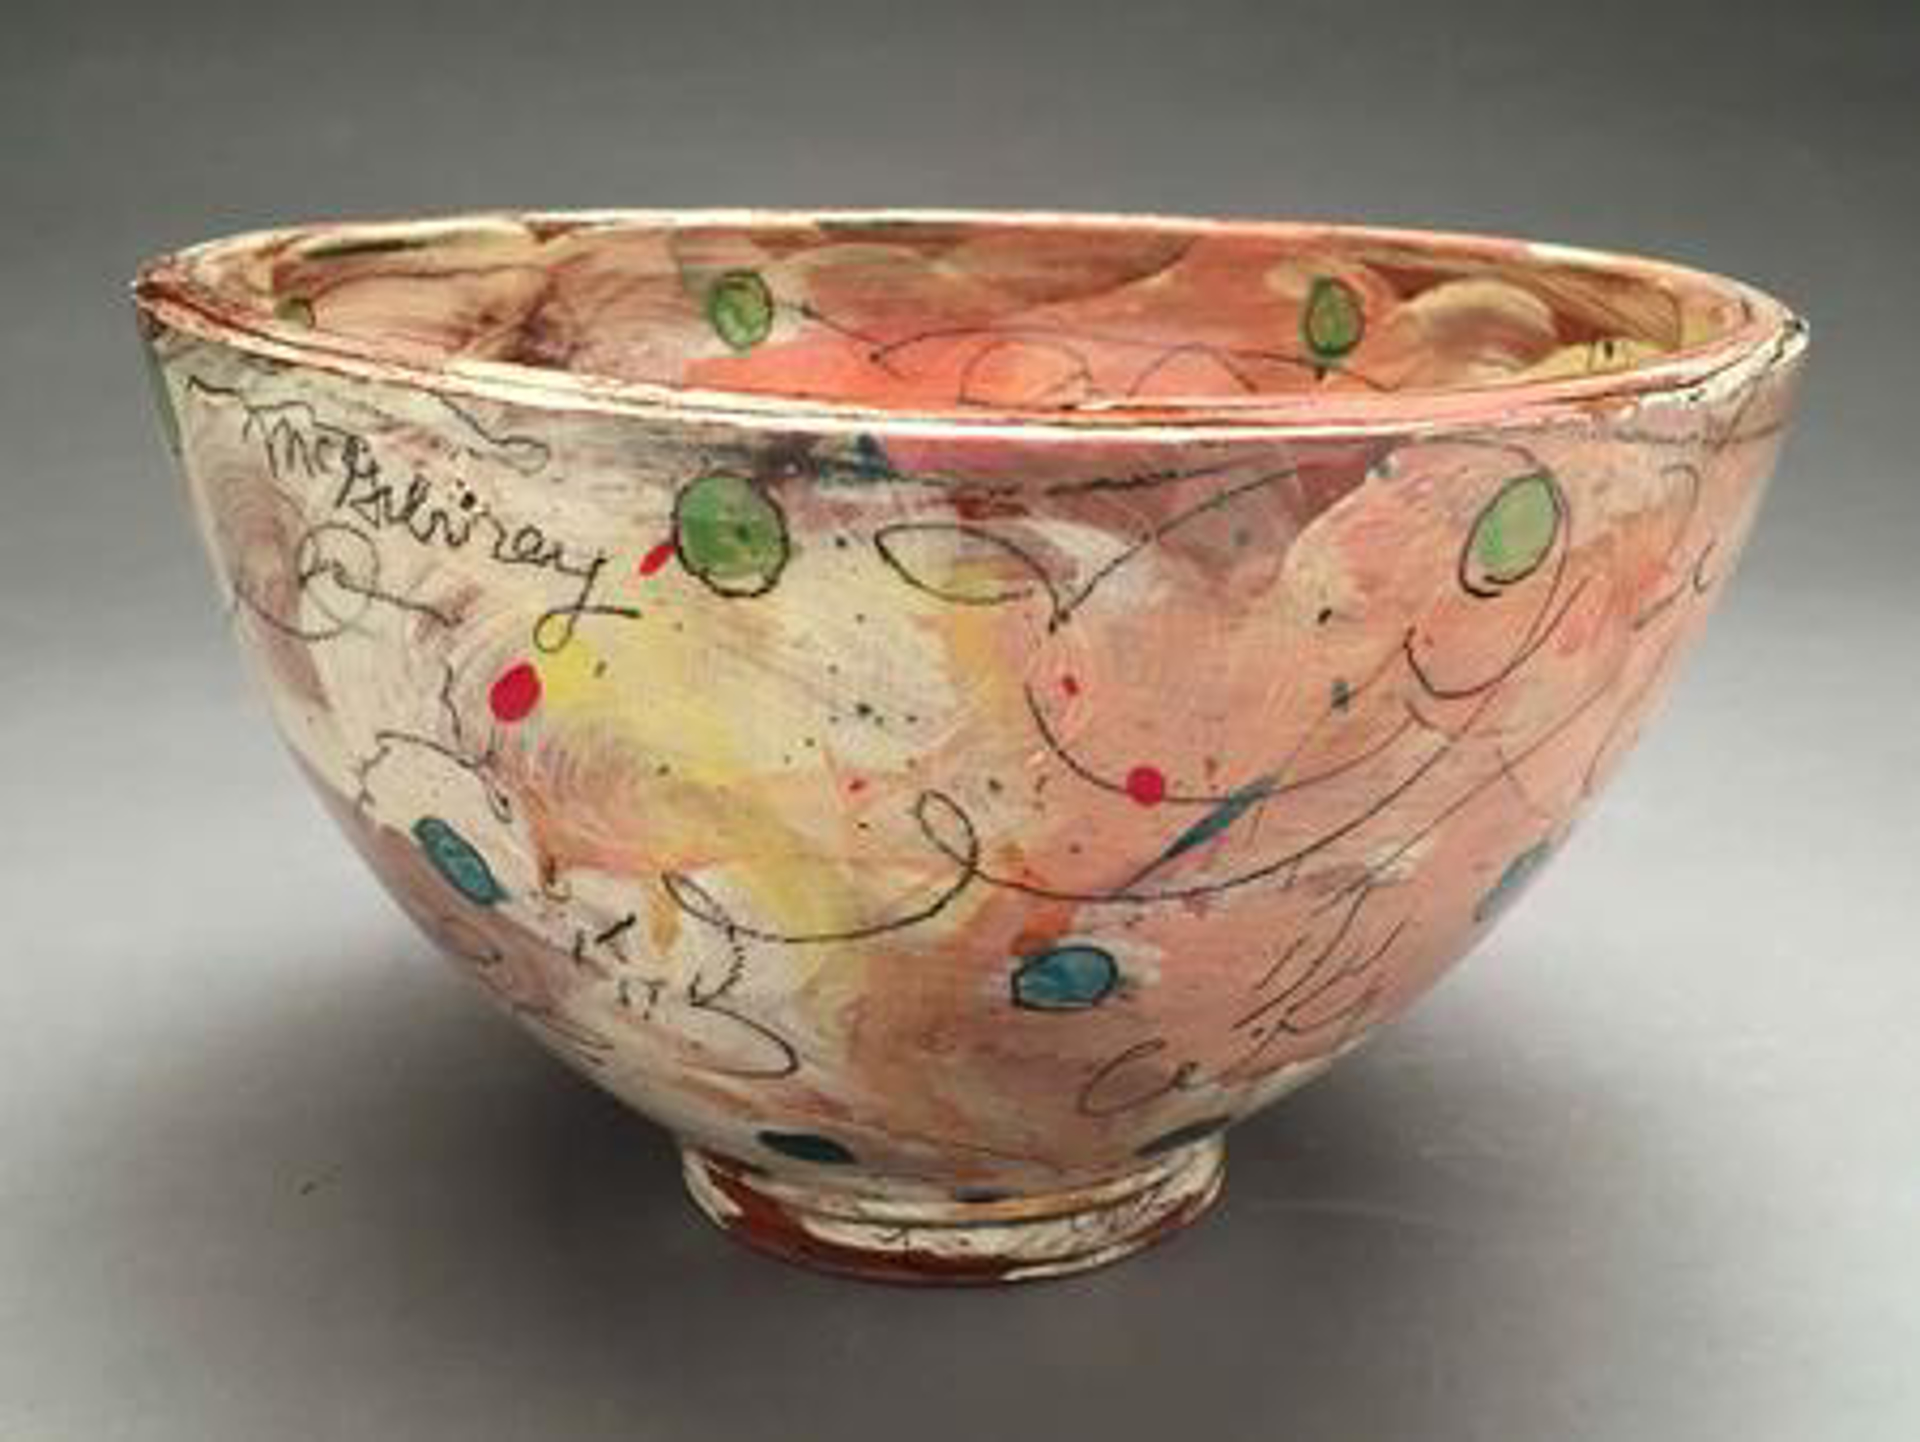 Medium Bowl by Susan McGilvrey